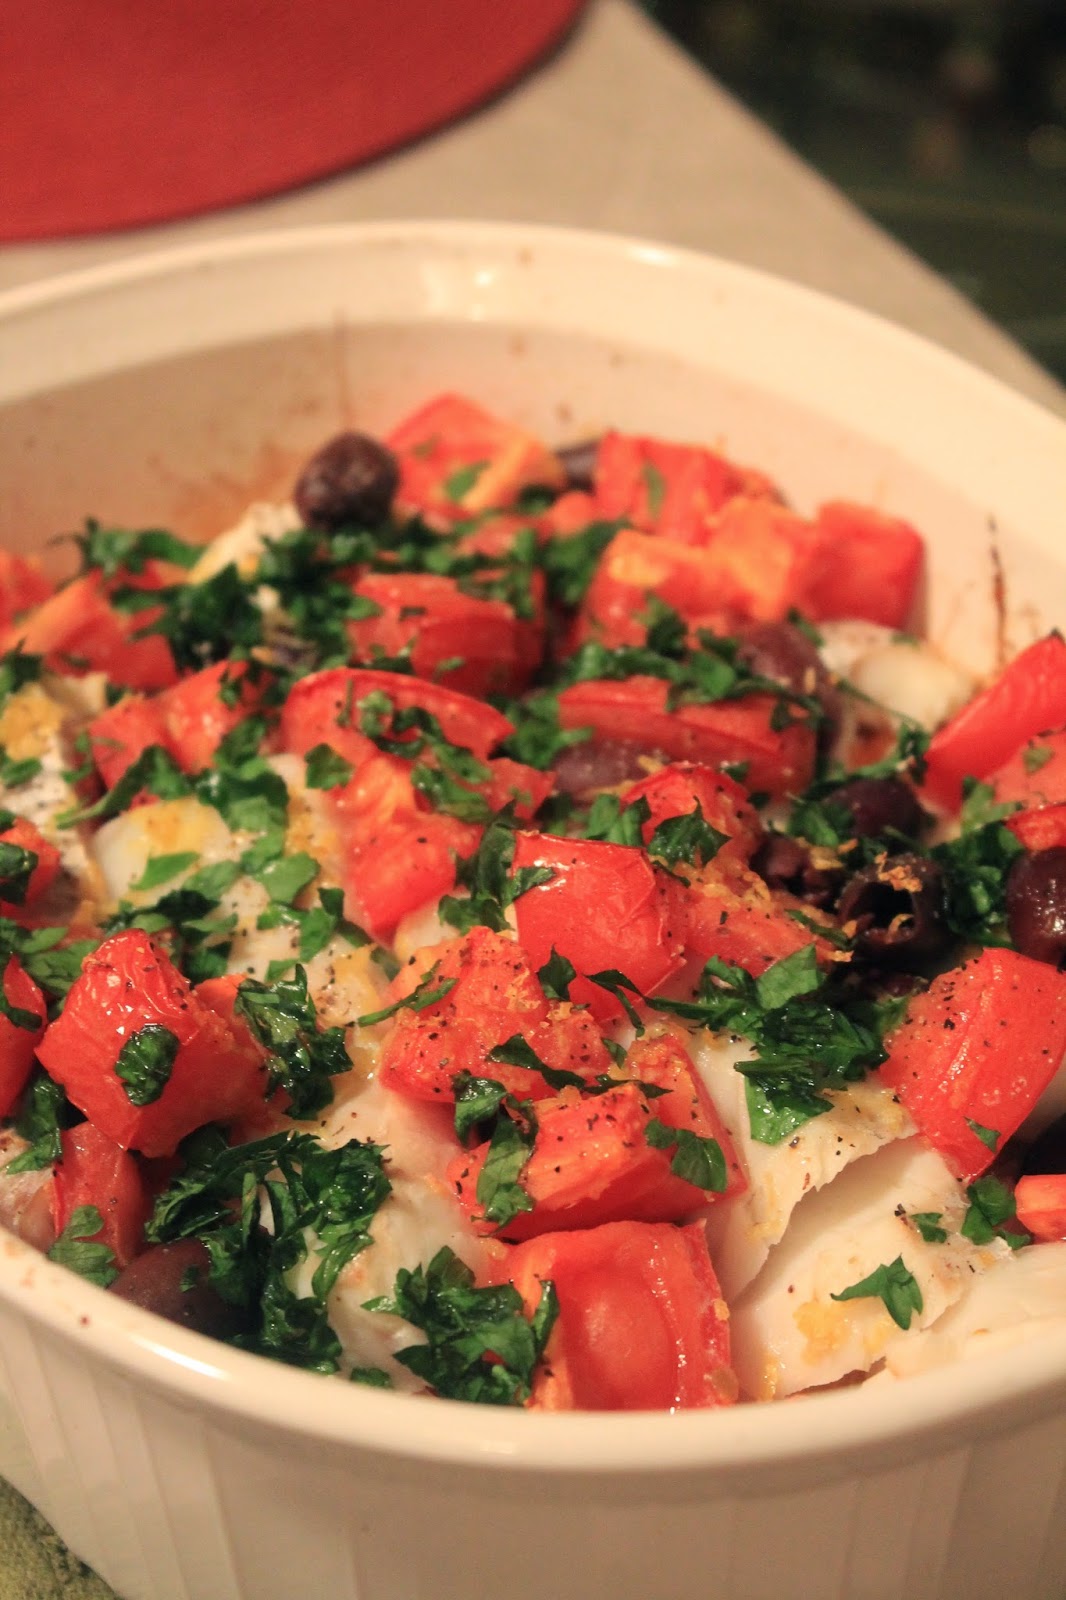 The Cultural Dish: Mediterranean Fish Casserole